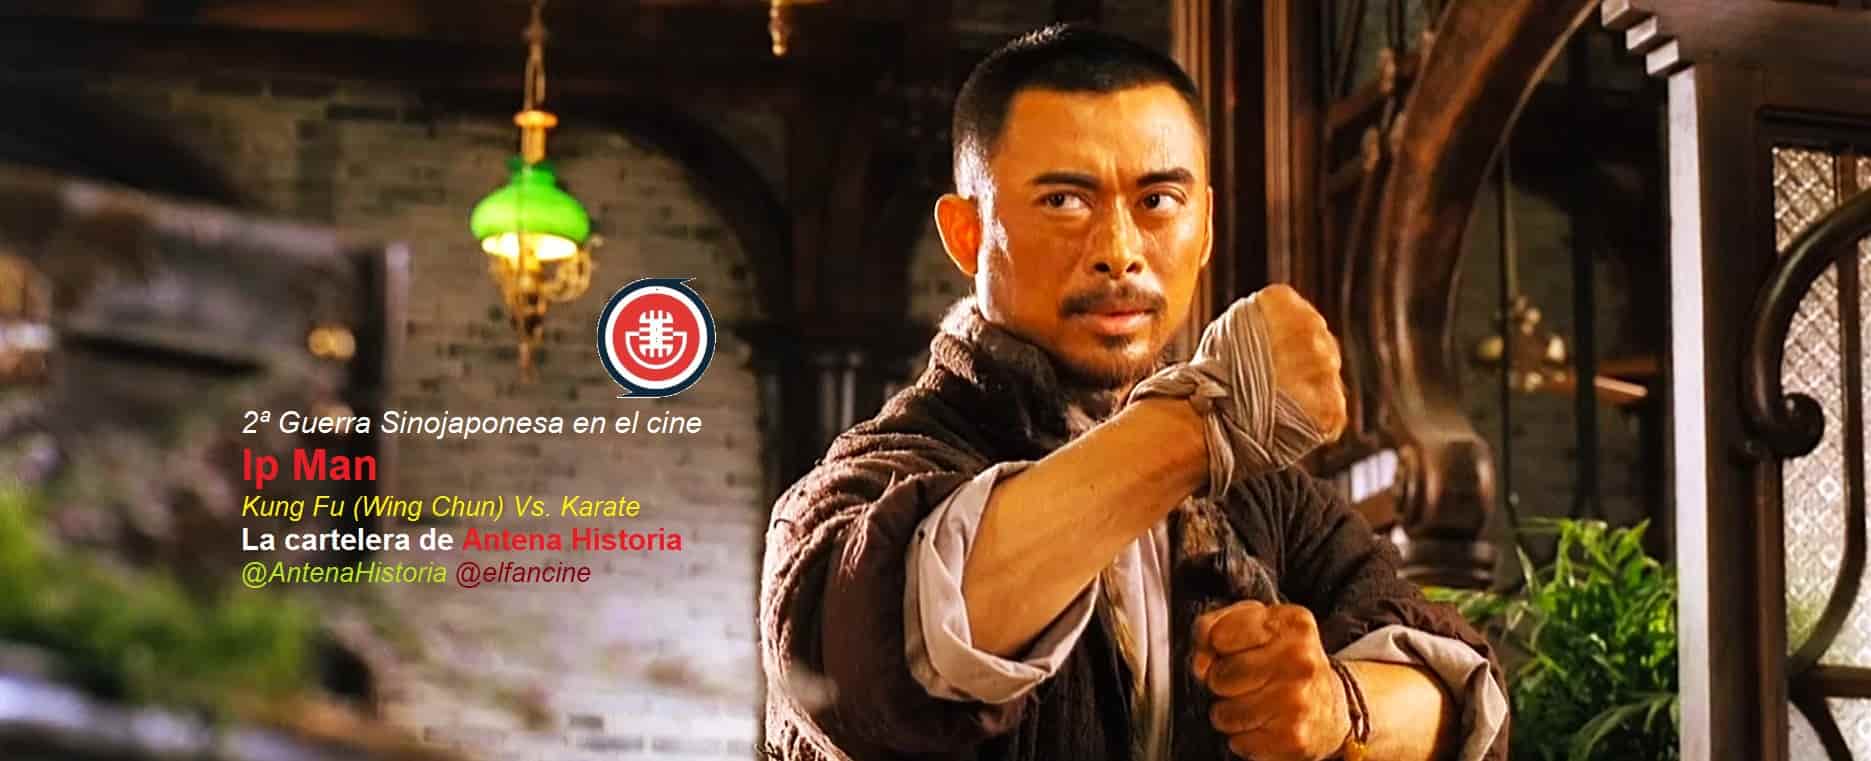 Kung Fu - Karate - Ninjutsu - Wing Chun - Bruce Lee - Guerra Sinojaponesa - HRM Ediciones - 葉問 - el fancine - Antena Historia - Chiang Kai-Shek - Hong Kong - Asociación ADC - Podcast de cine